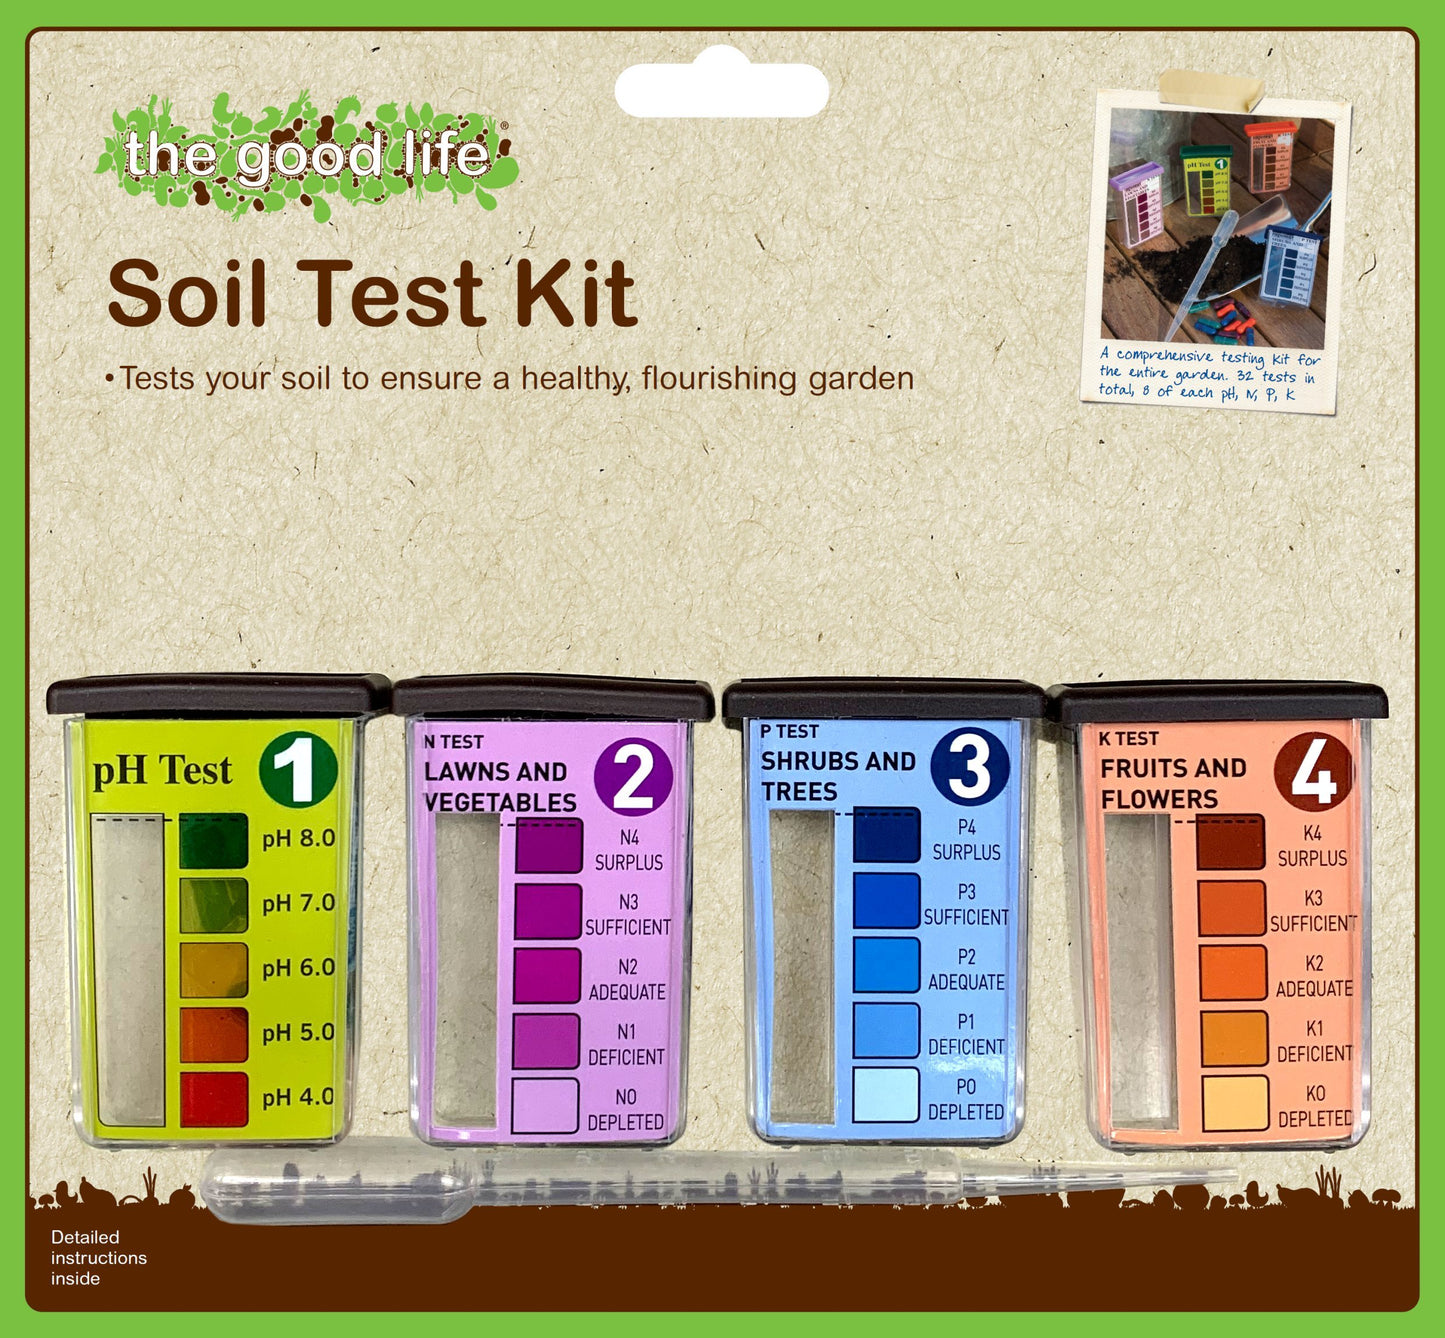 The Good Life Soil Test Kit